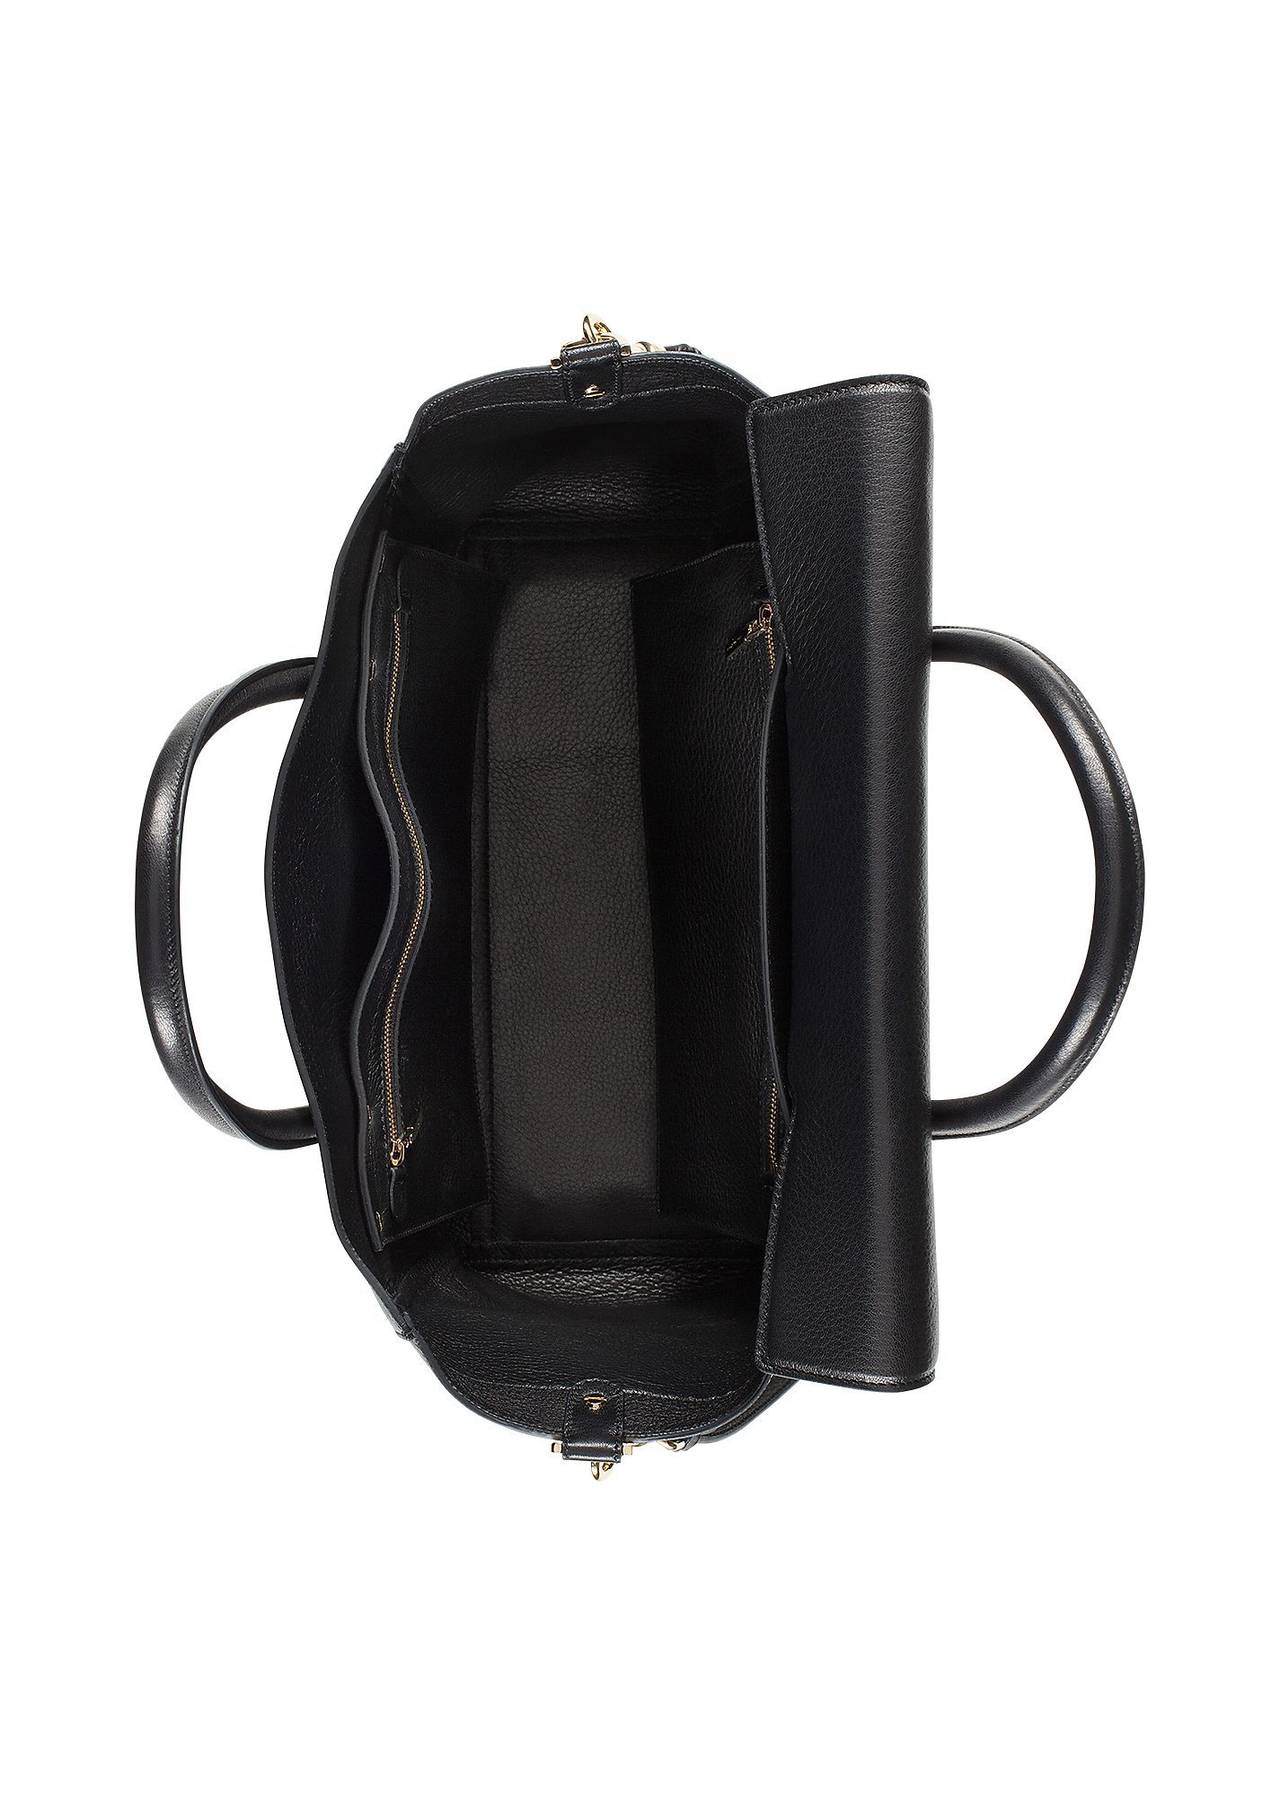 versace black leather bag